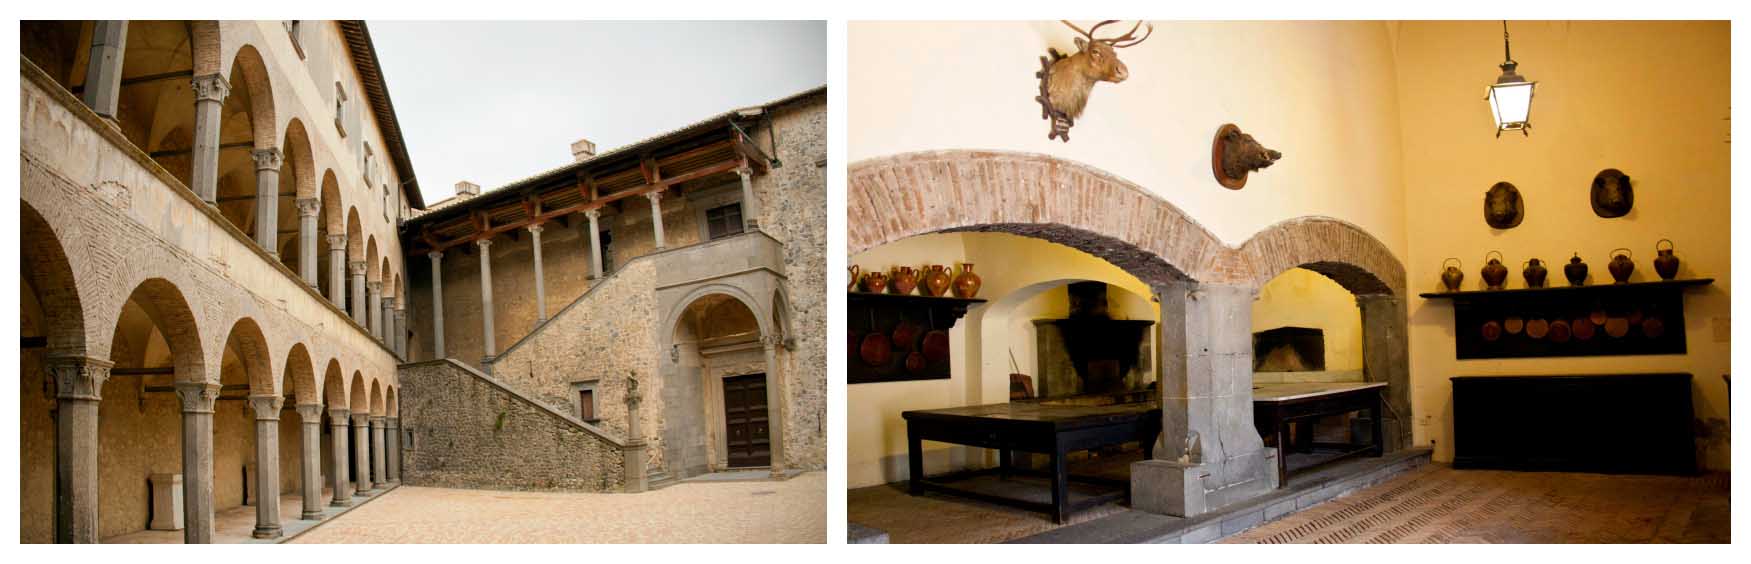 Odescalchi Castle in Bracciano Tour Tips visit Medieval kitchen